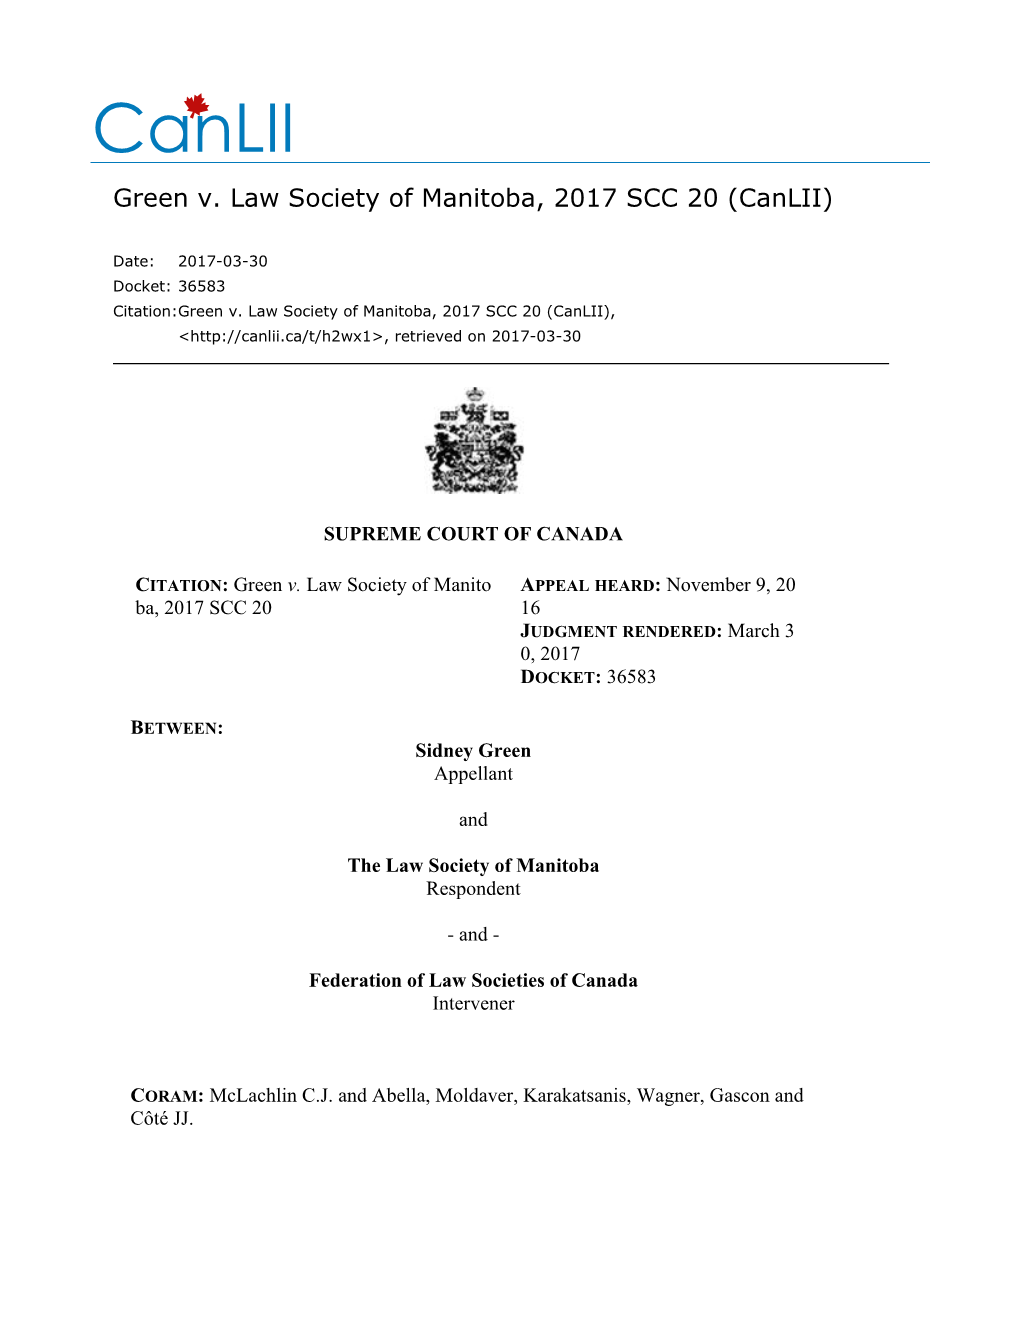 Green V. Law Society of Manitoba, 2017 SCC 20 (Canlii)